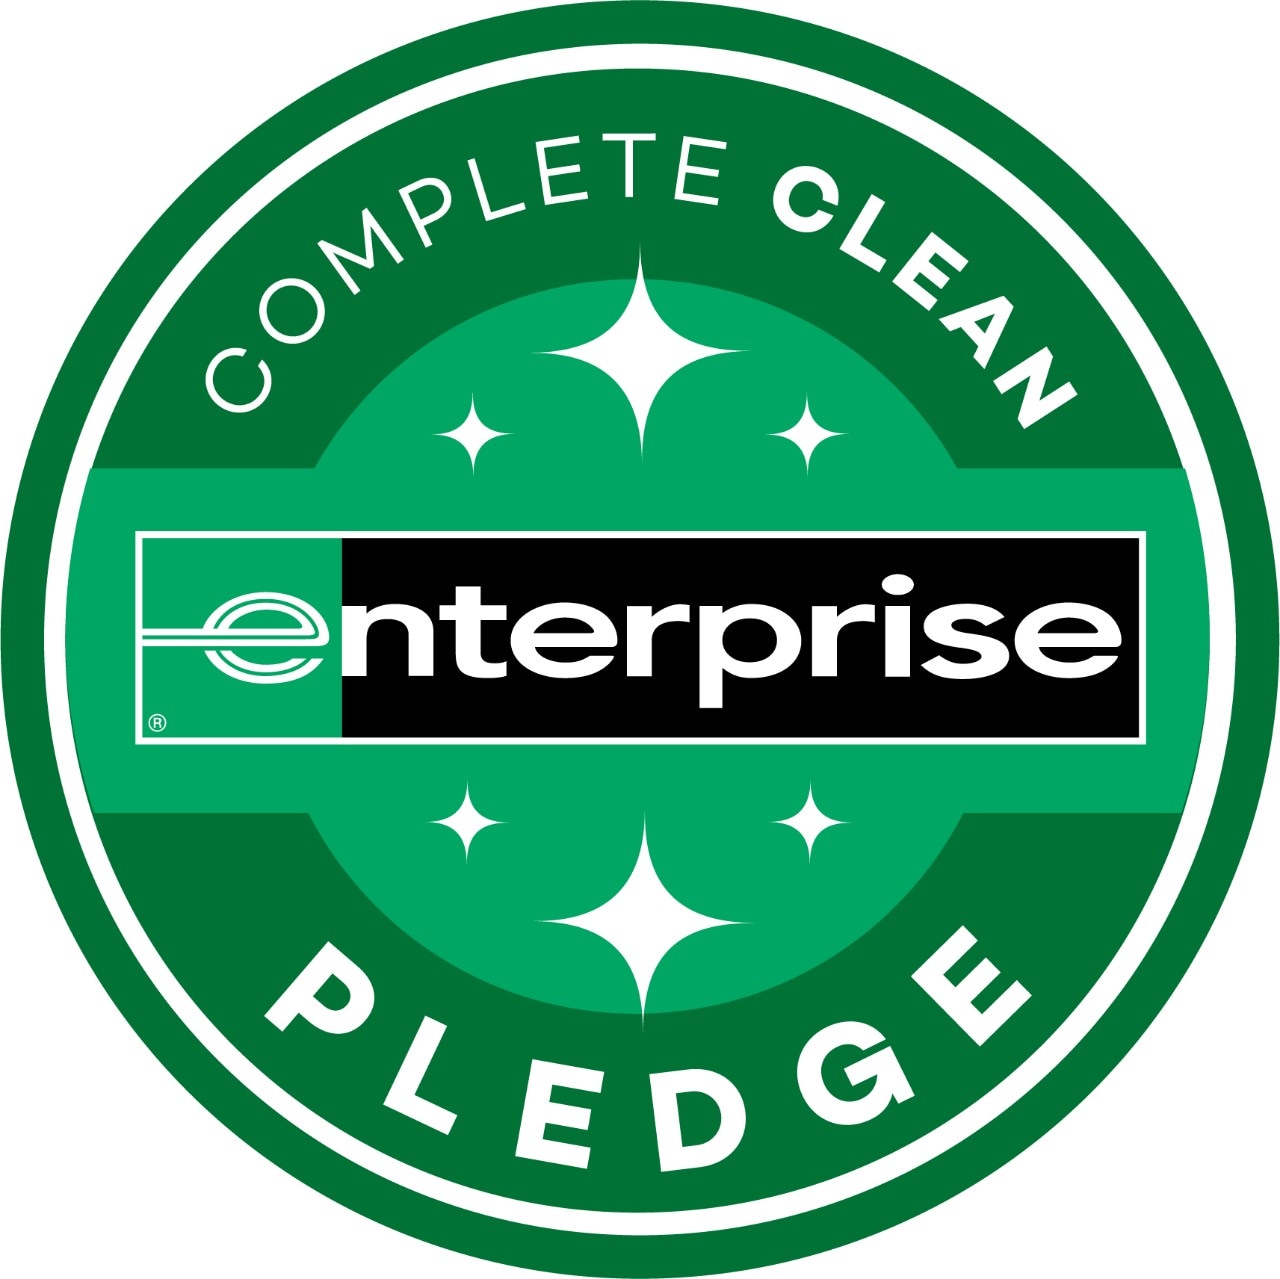 Enterprise Badge